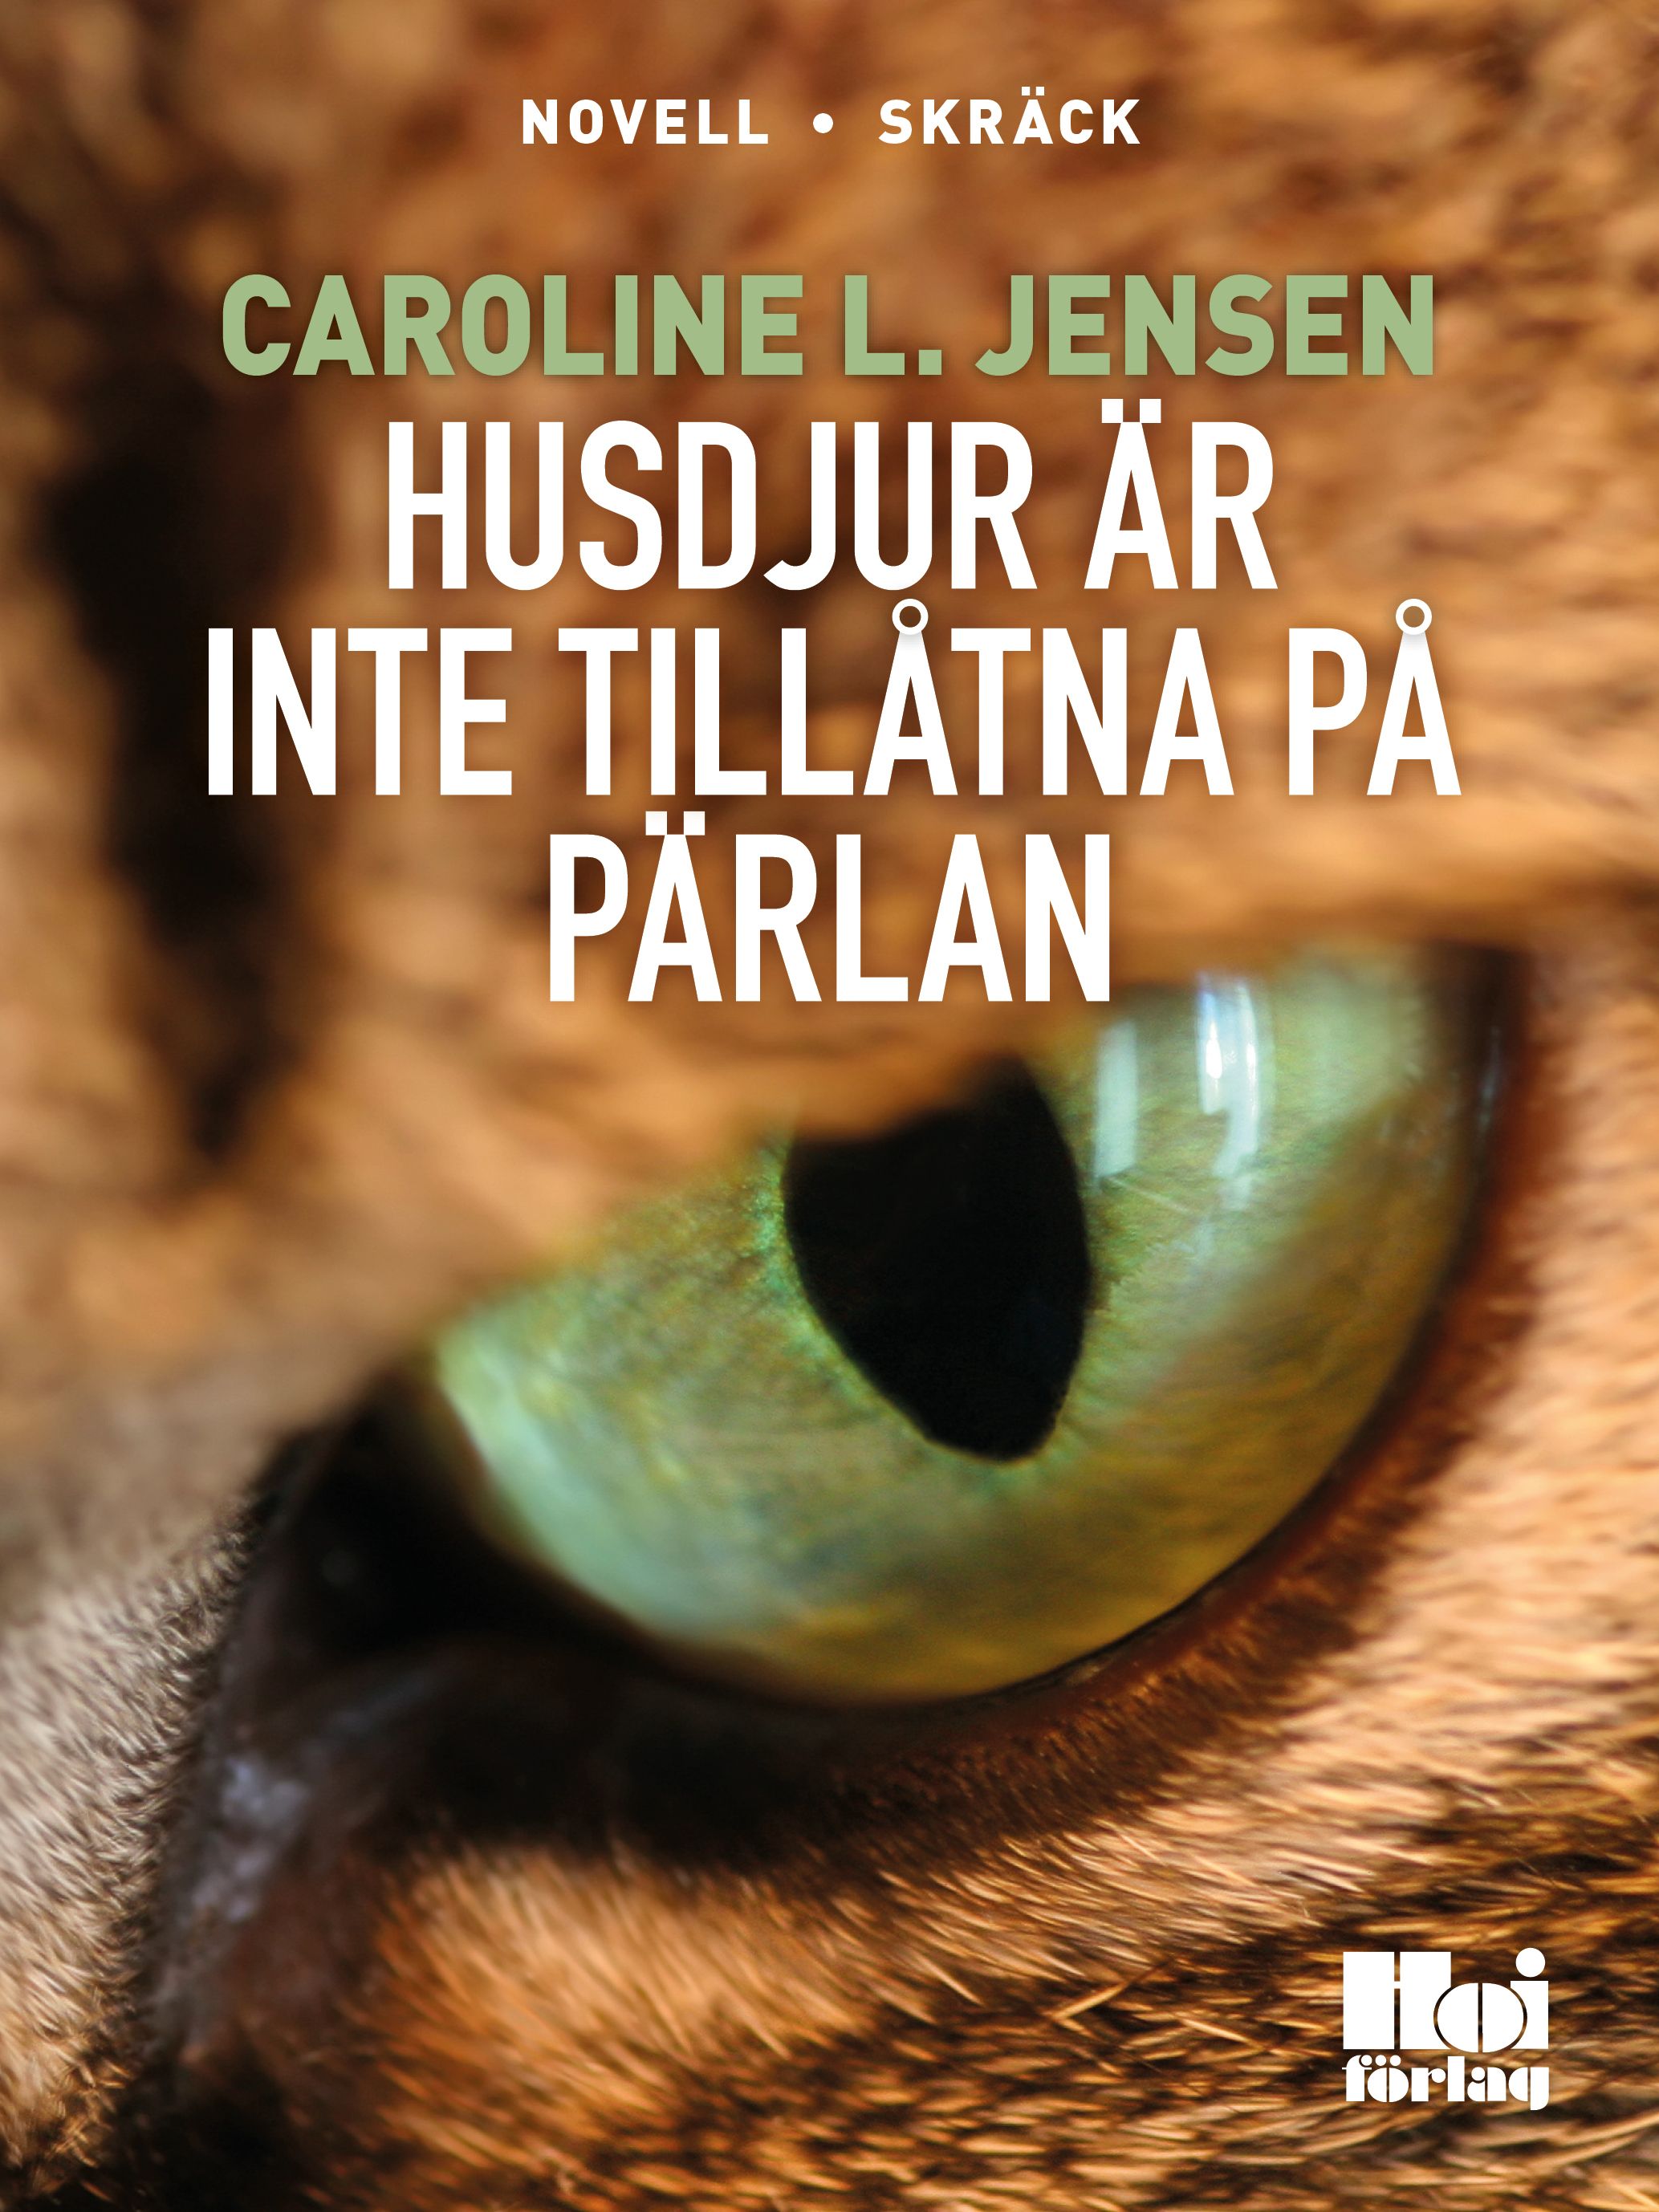 Husdjur är inte tillåtna på Pärlan, e-bog af Caroline L Jensen